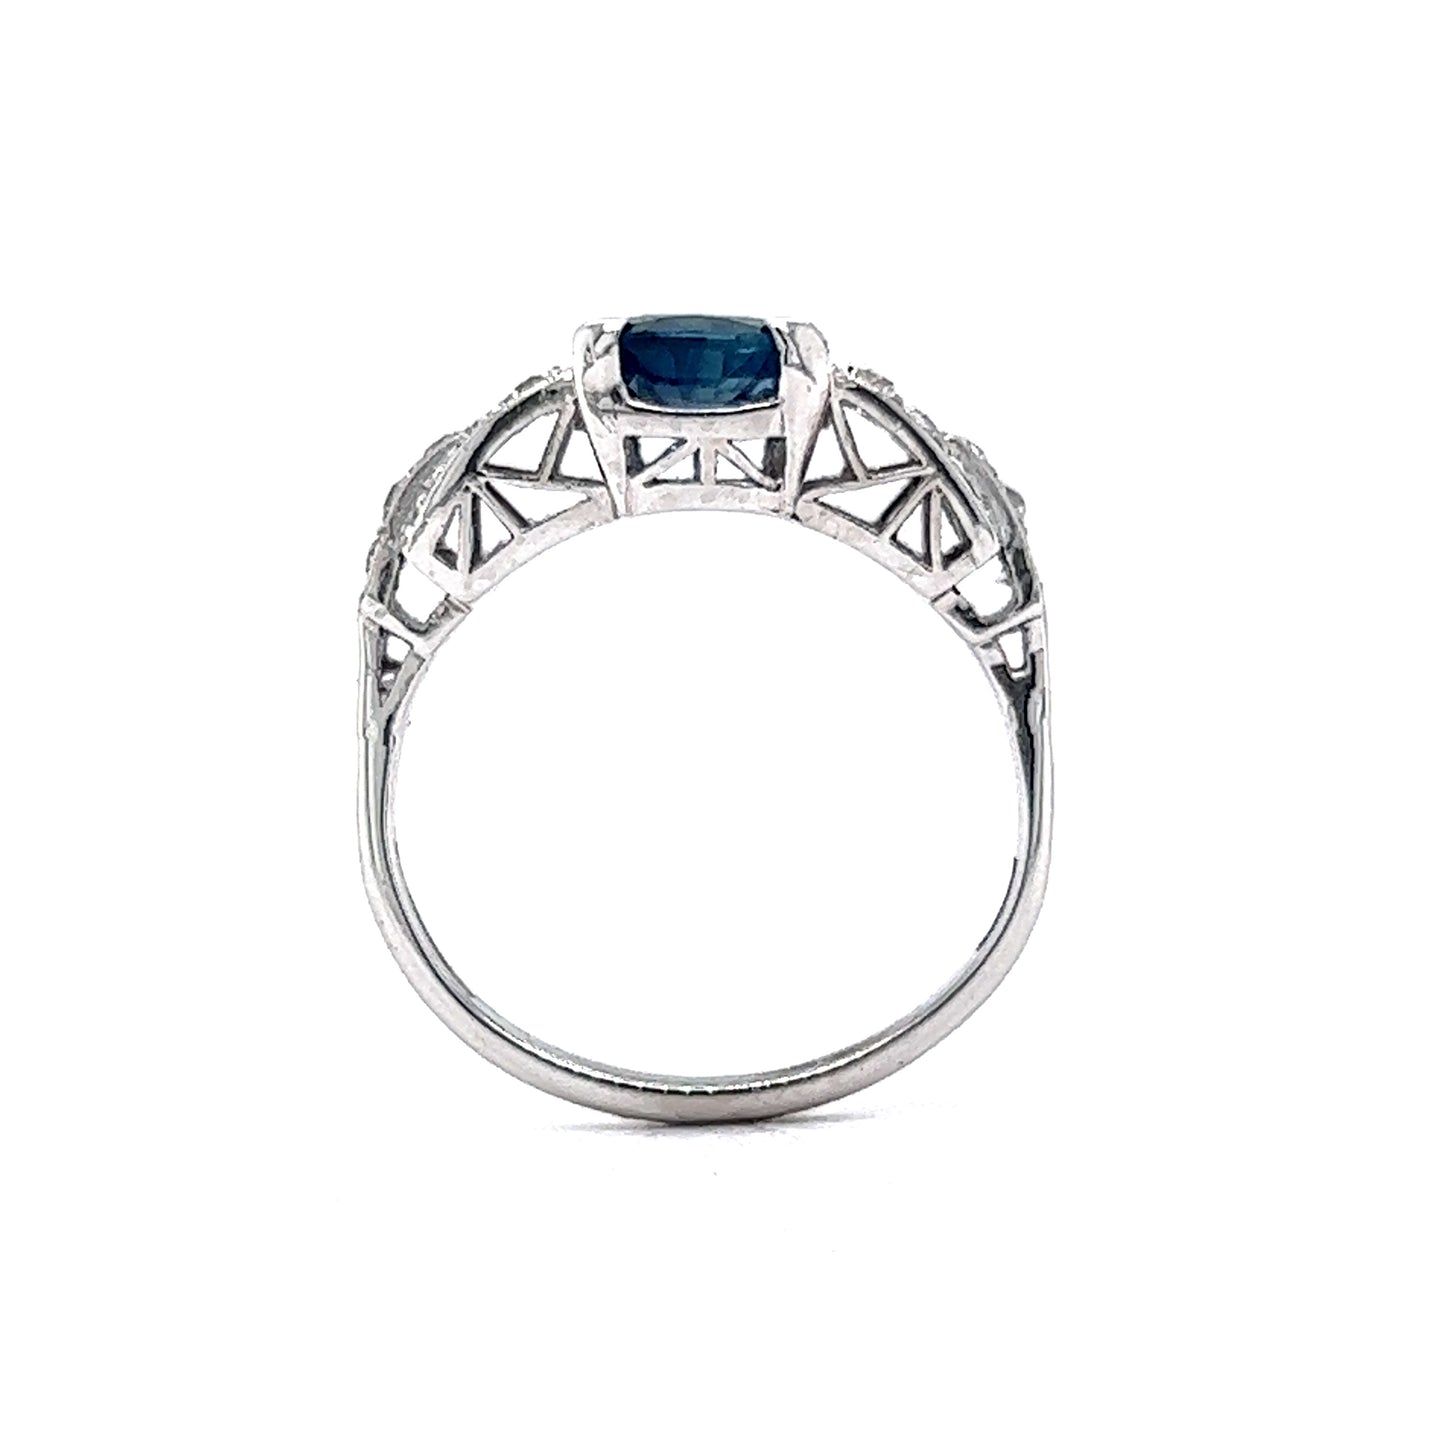 Antique Art Deco Oval Sapphire & Diamond Ring in 18k